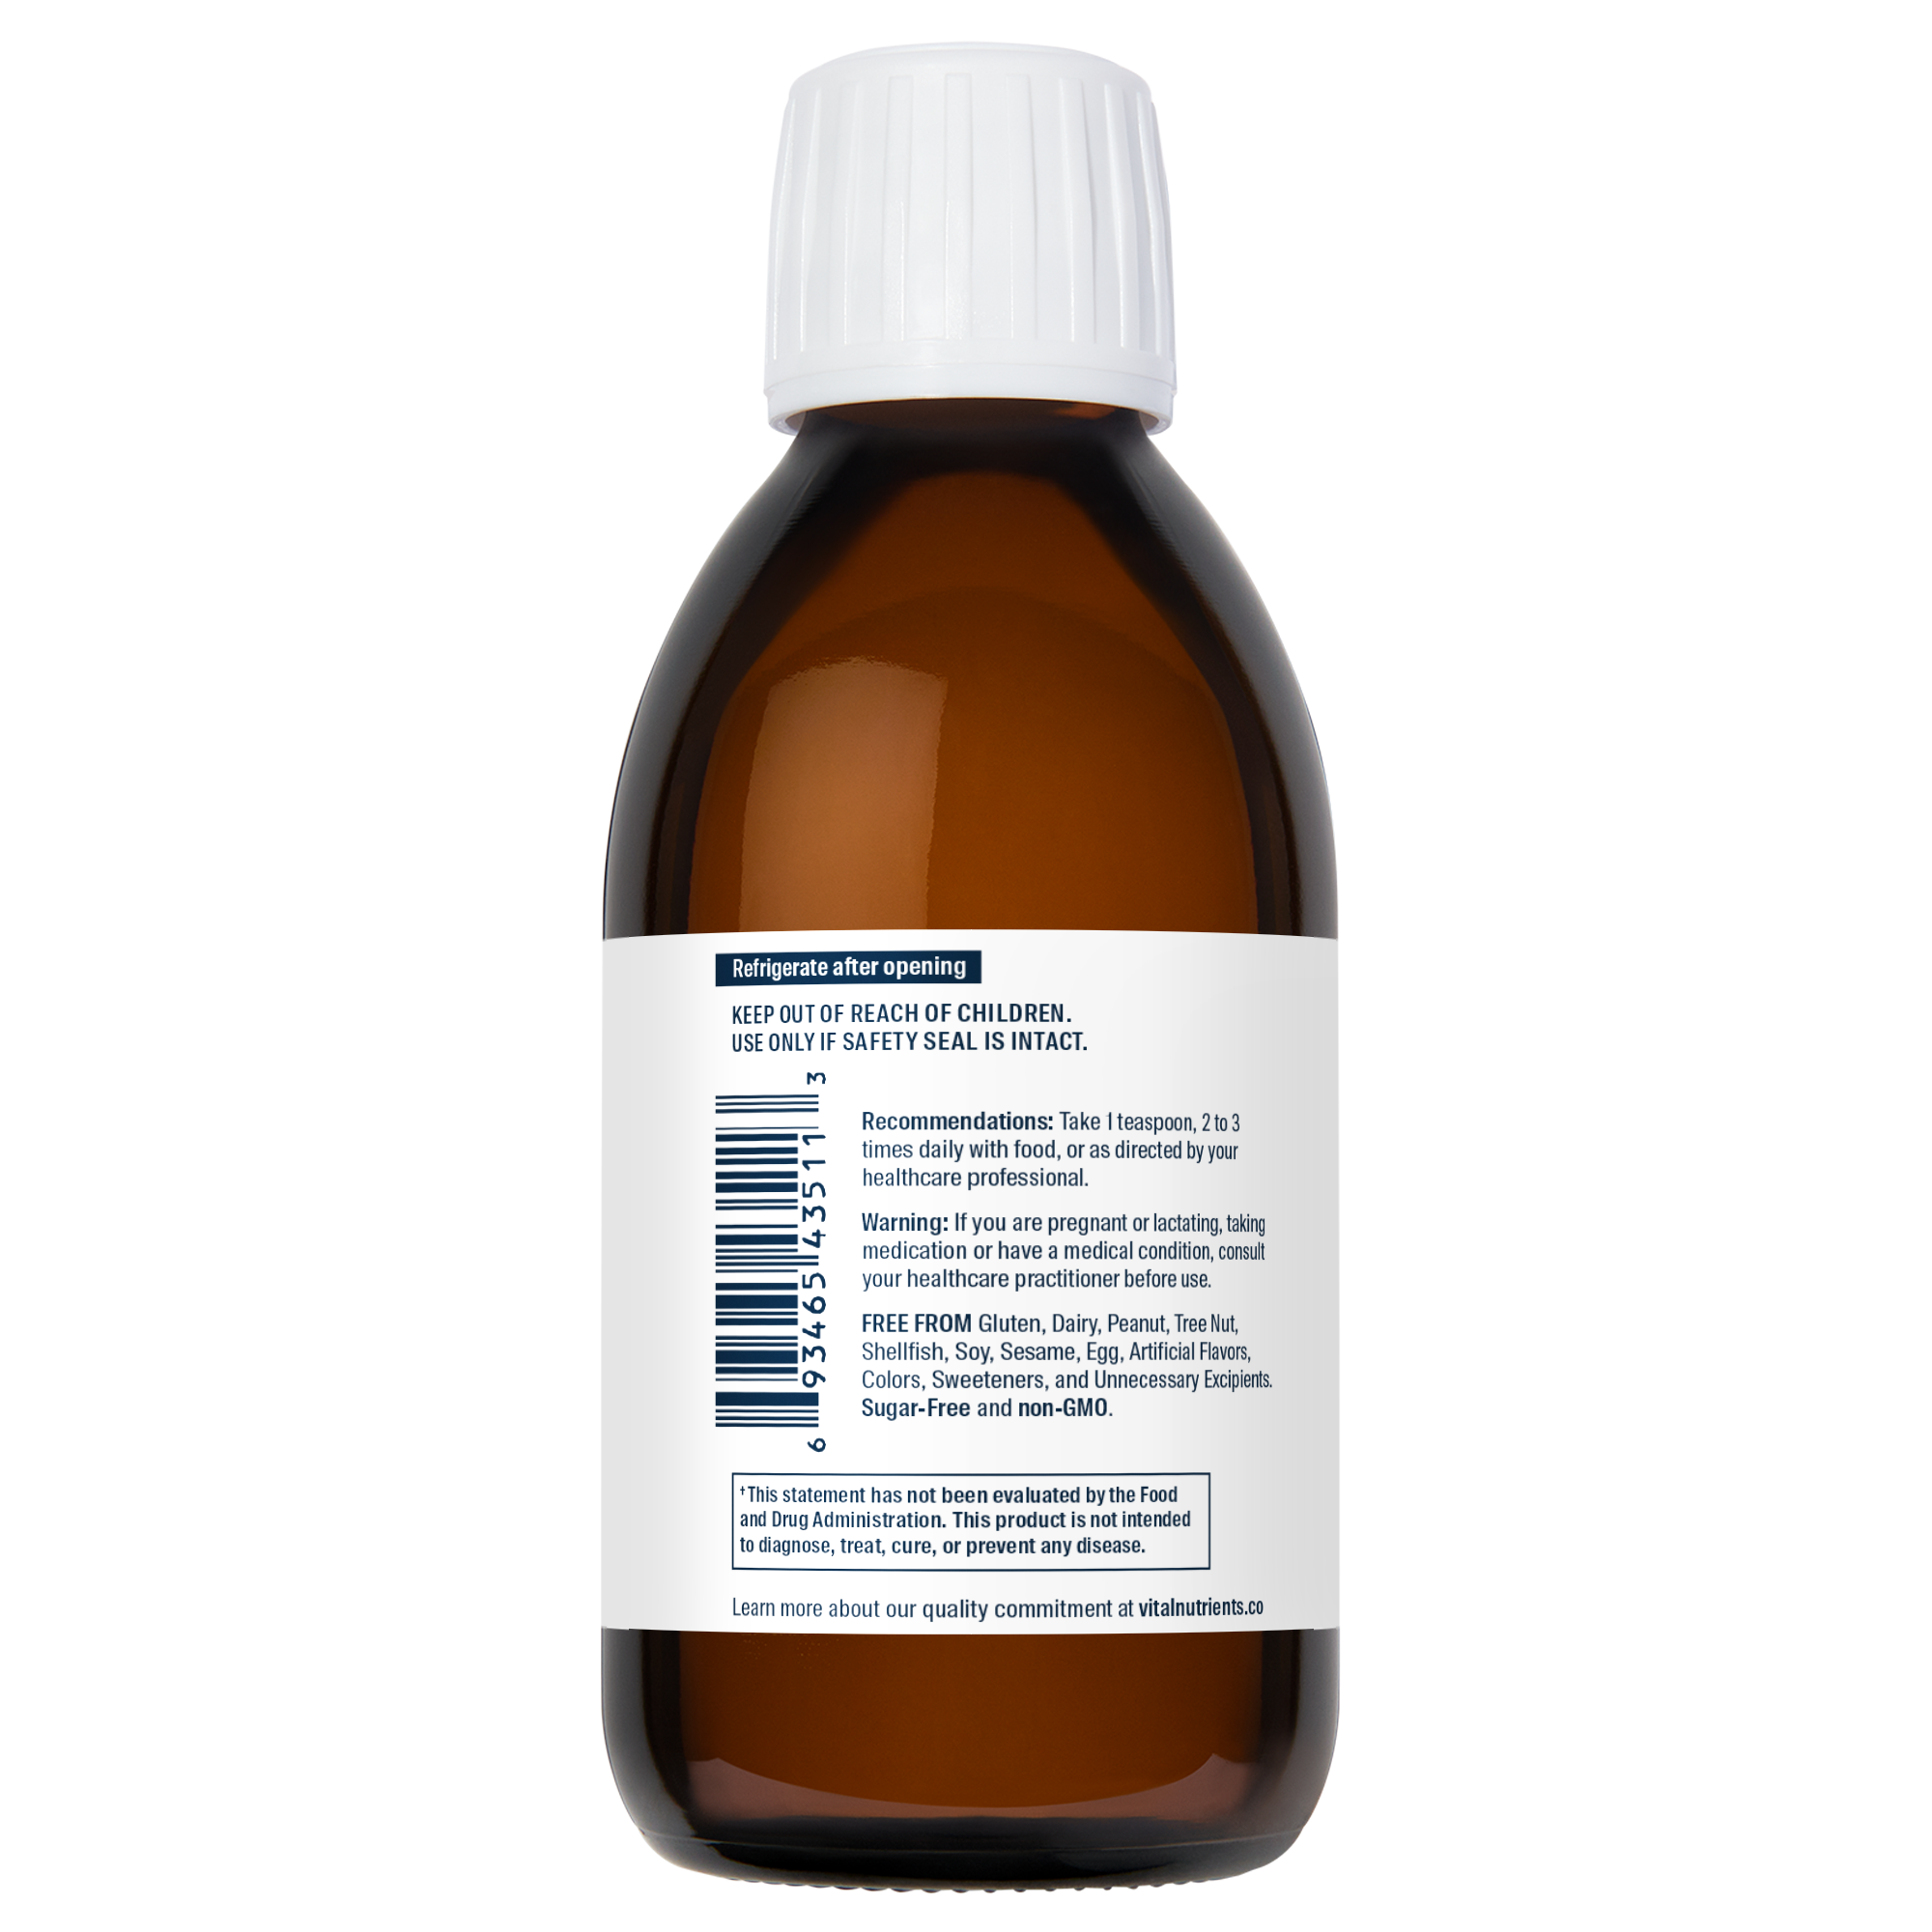 Ultra Pure® Fish Oil 1400 Pharmaceutical Grade